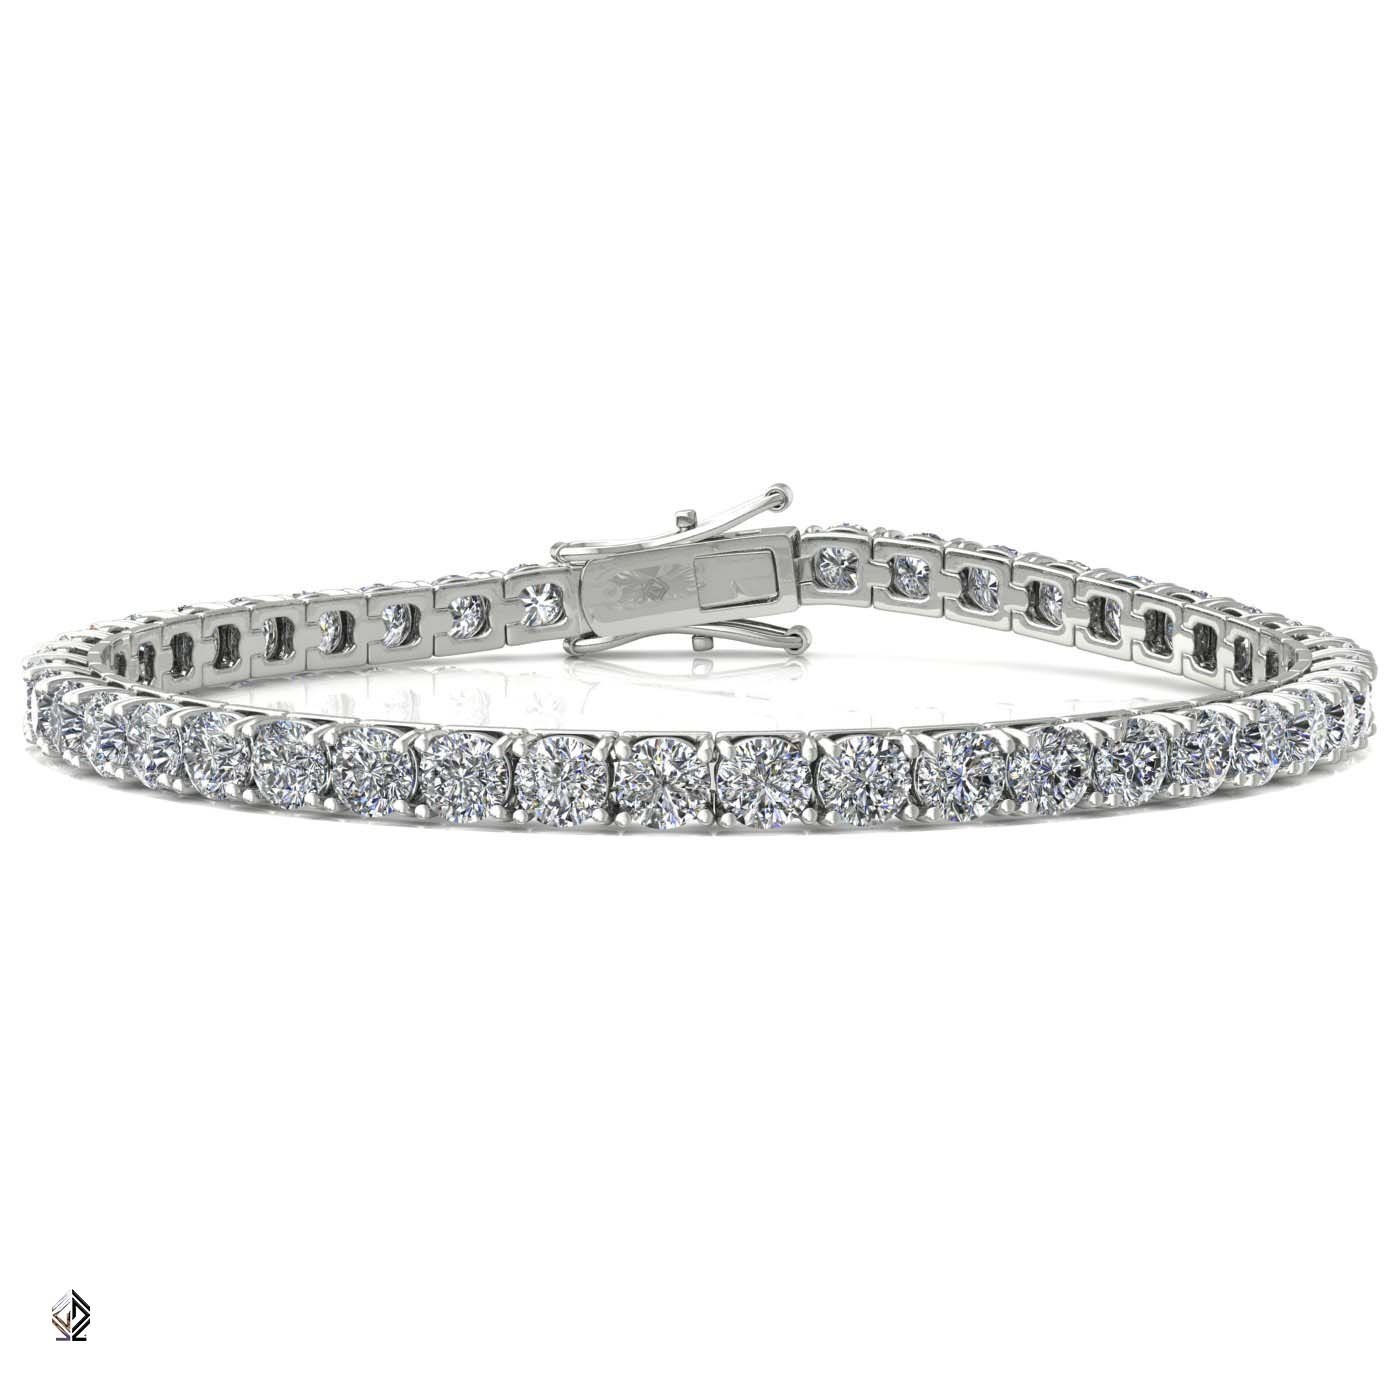 18k white gold 3.3mm 4 prong round shape diamond tennis bracelet in square setting